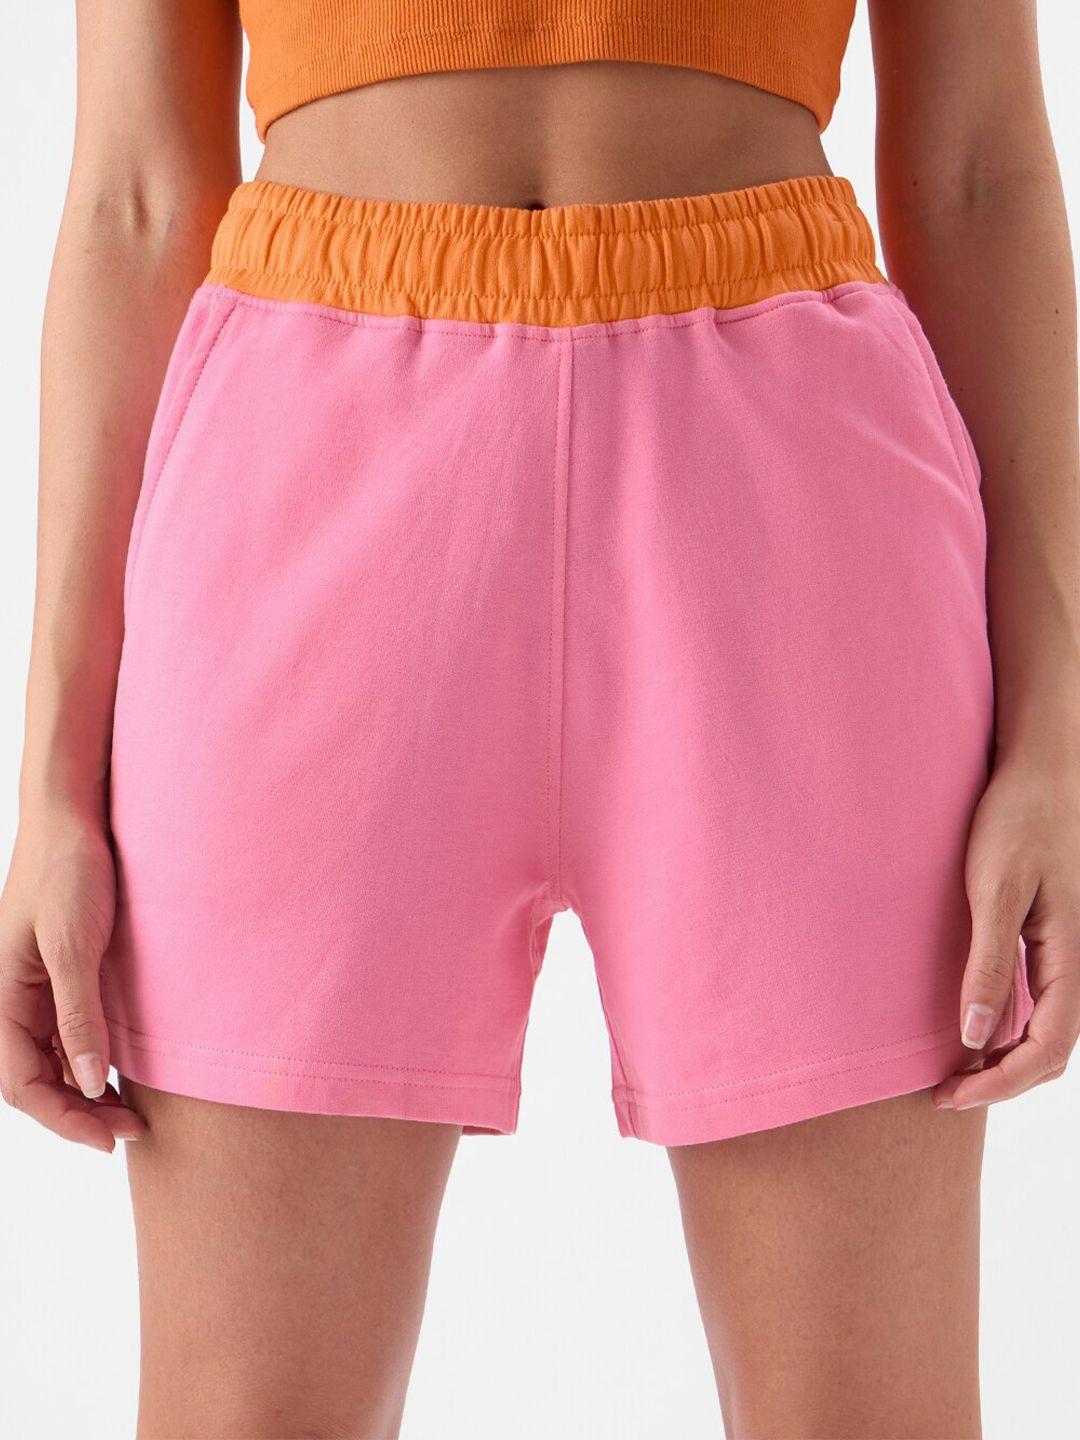 the-souled-store-women-pure-cotton-hot-pants-shorts